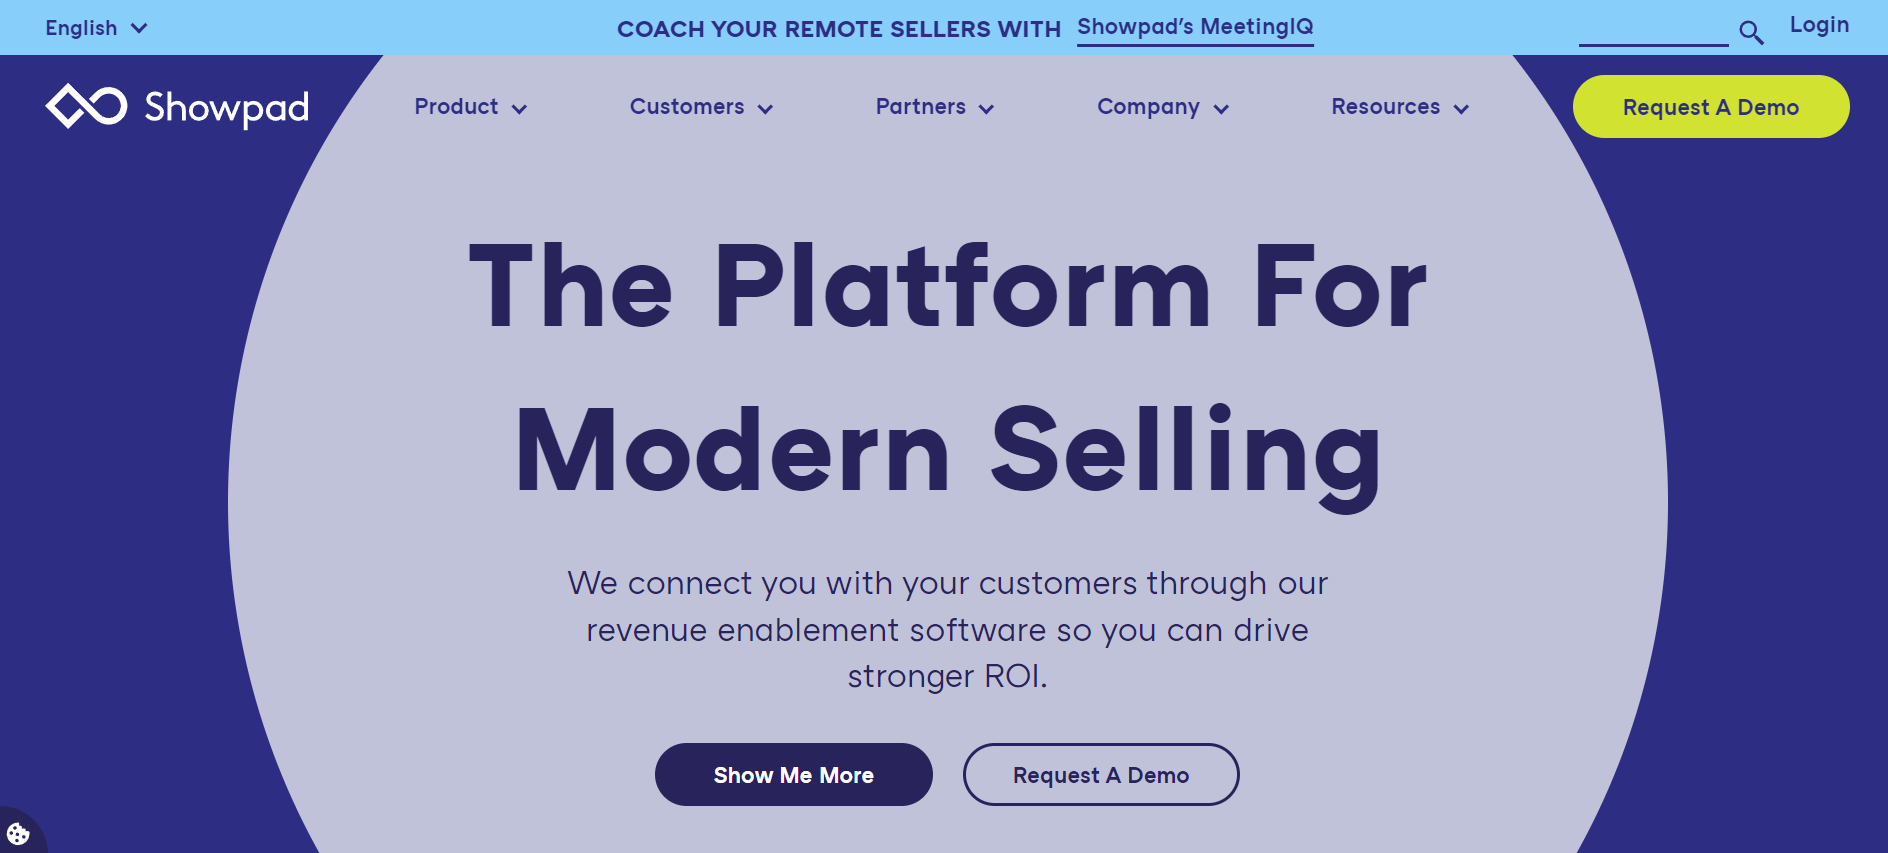 Showpad homepage: The Platform For Modern Selling